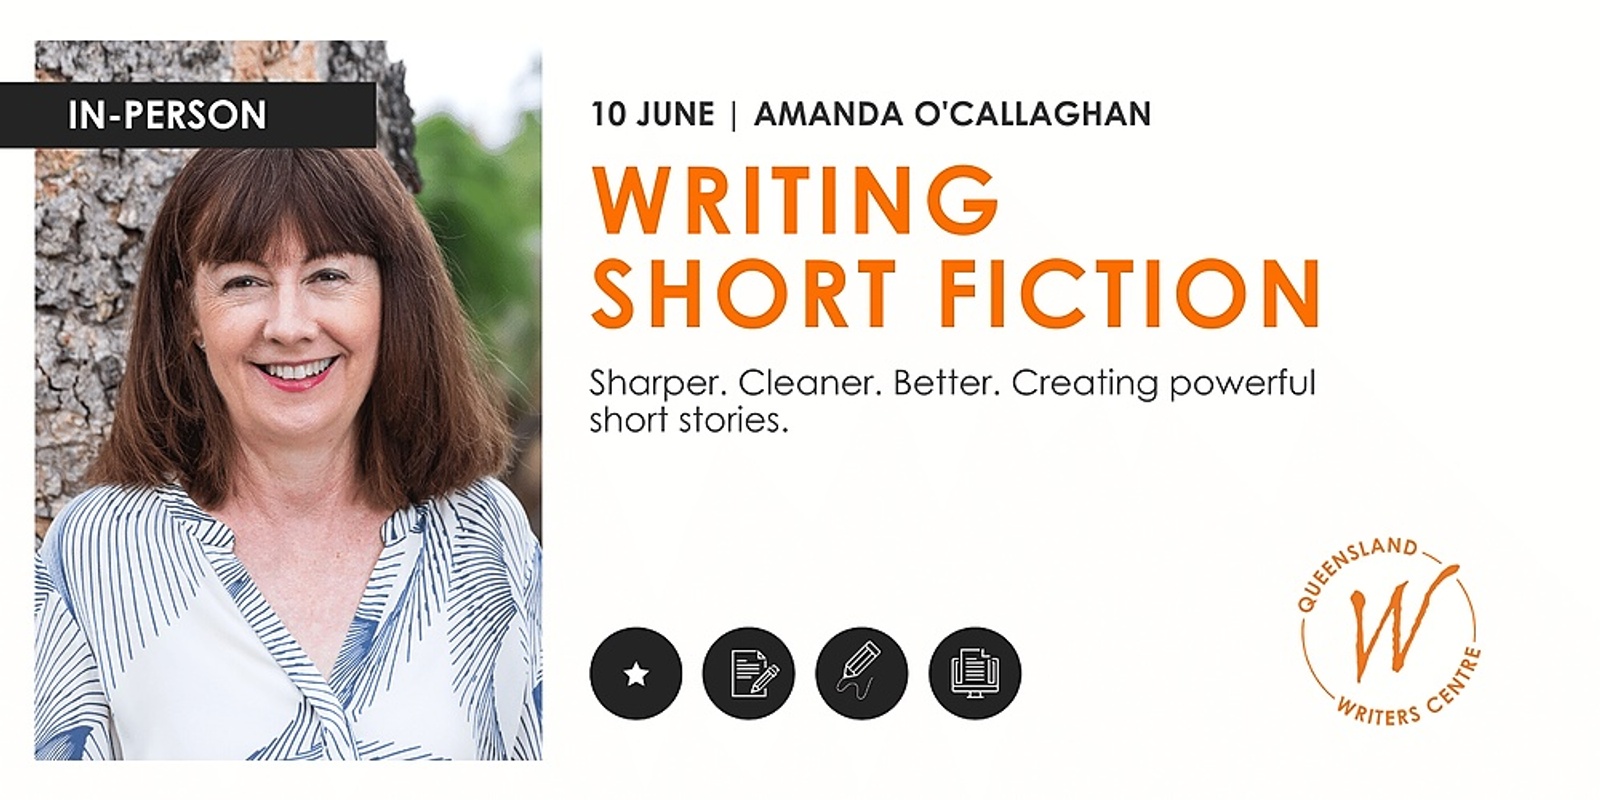 Writing Short Fiction with Amanda O'Callaghan